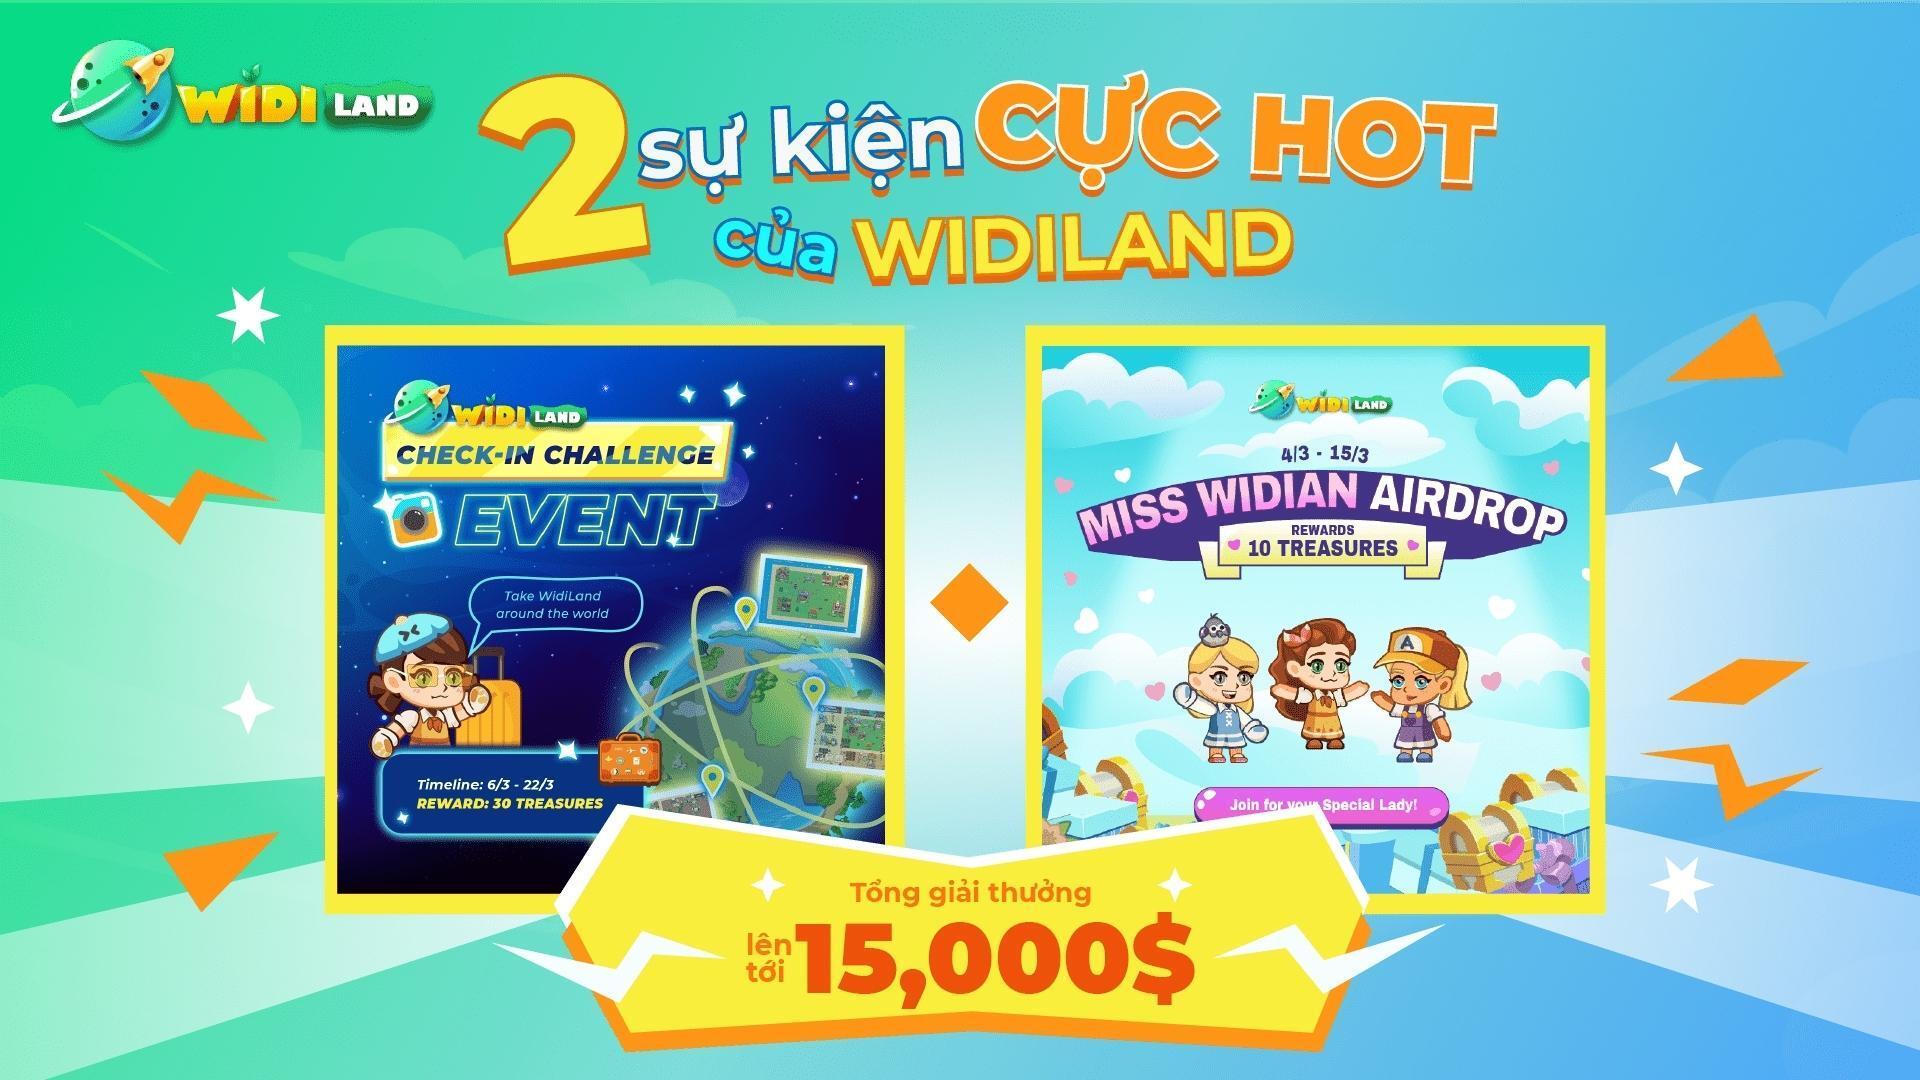 widiland-gamefi-mo-man-2022-voi-hai-su-kien-cuc-hot-cung-tong-giai-thuong-len-den-15000-usd